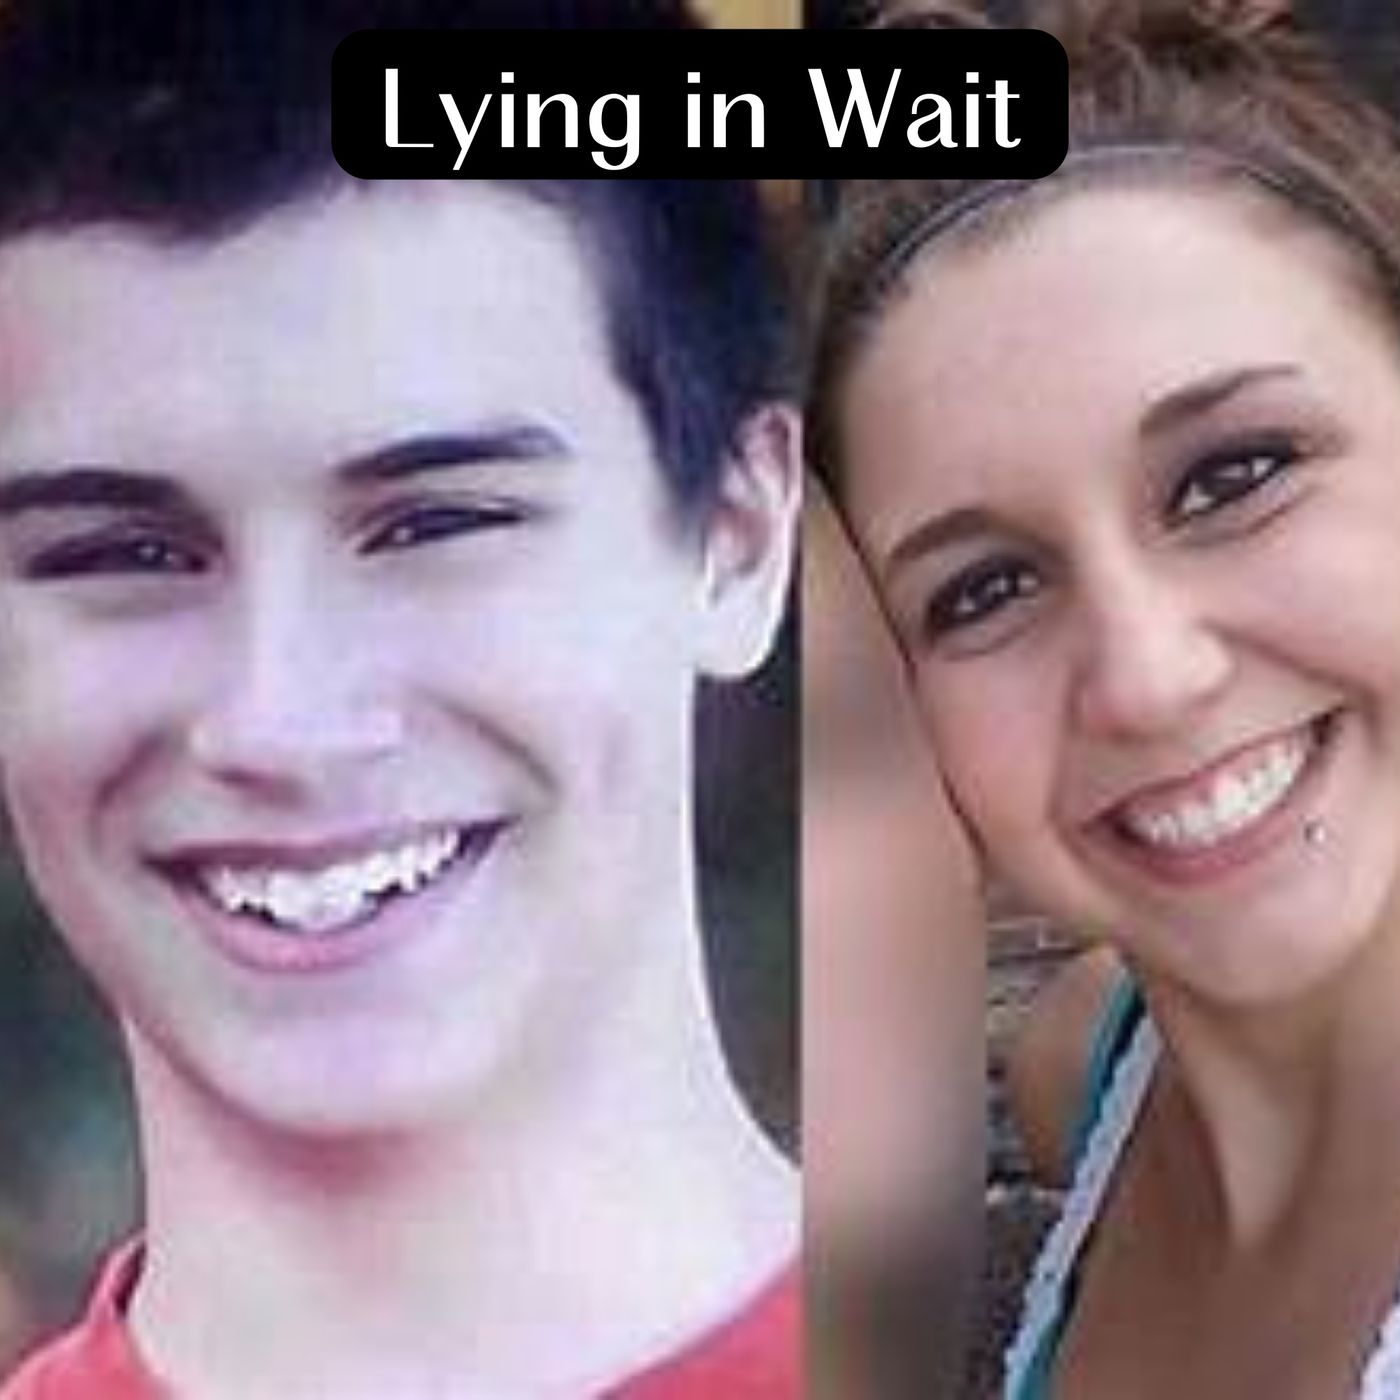 Lying in Wait: The Killings of Haile Kifer & Nicholas Brady